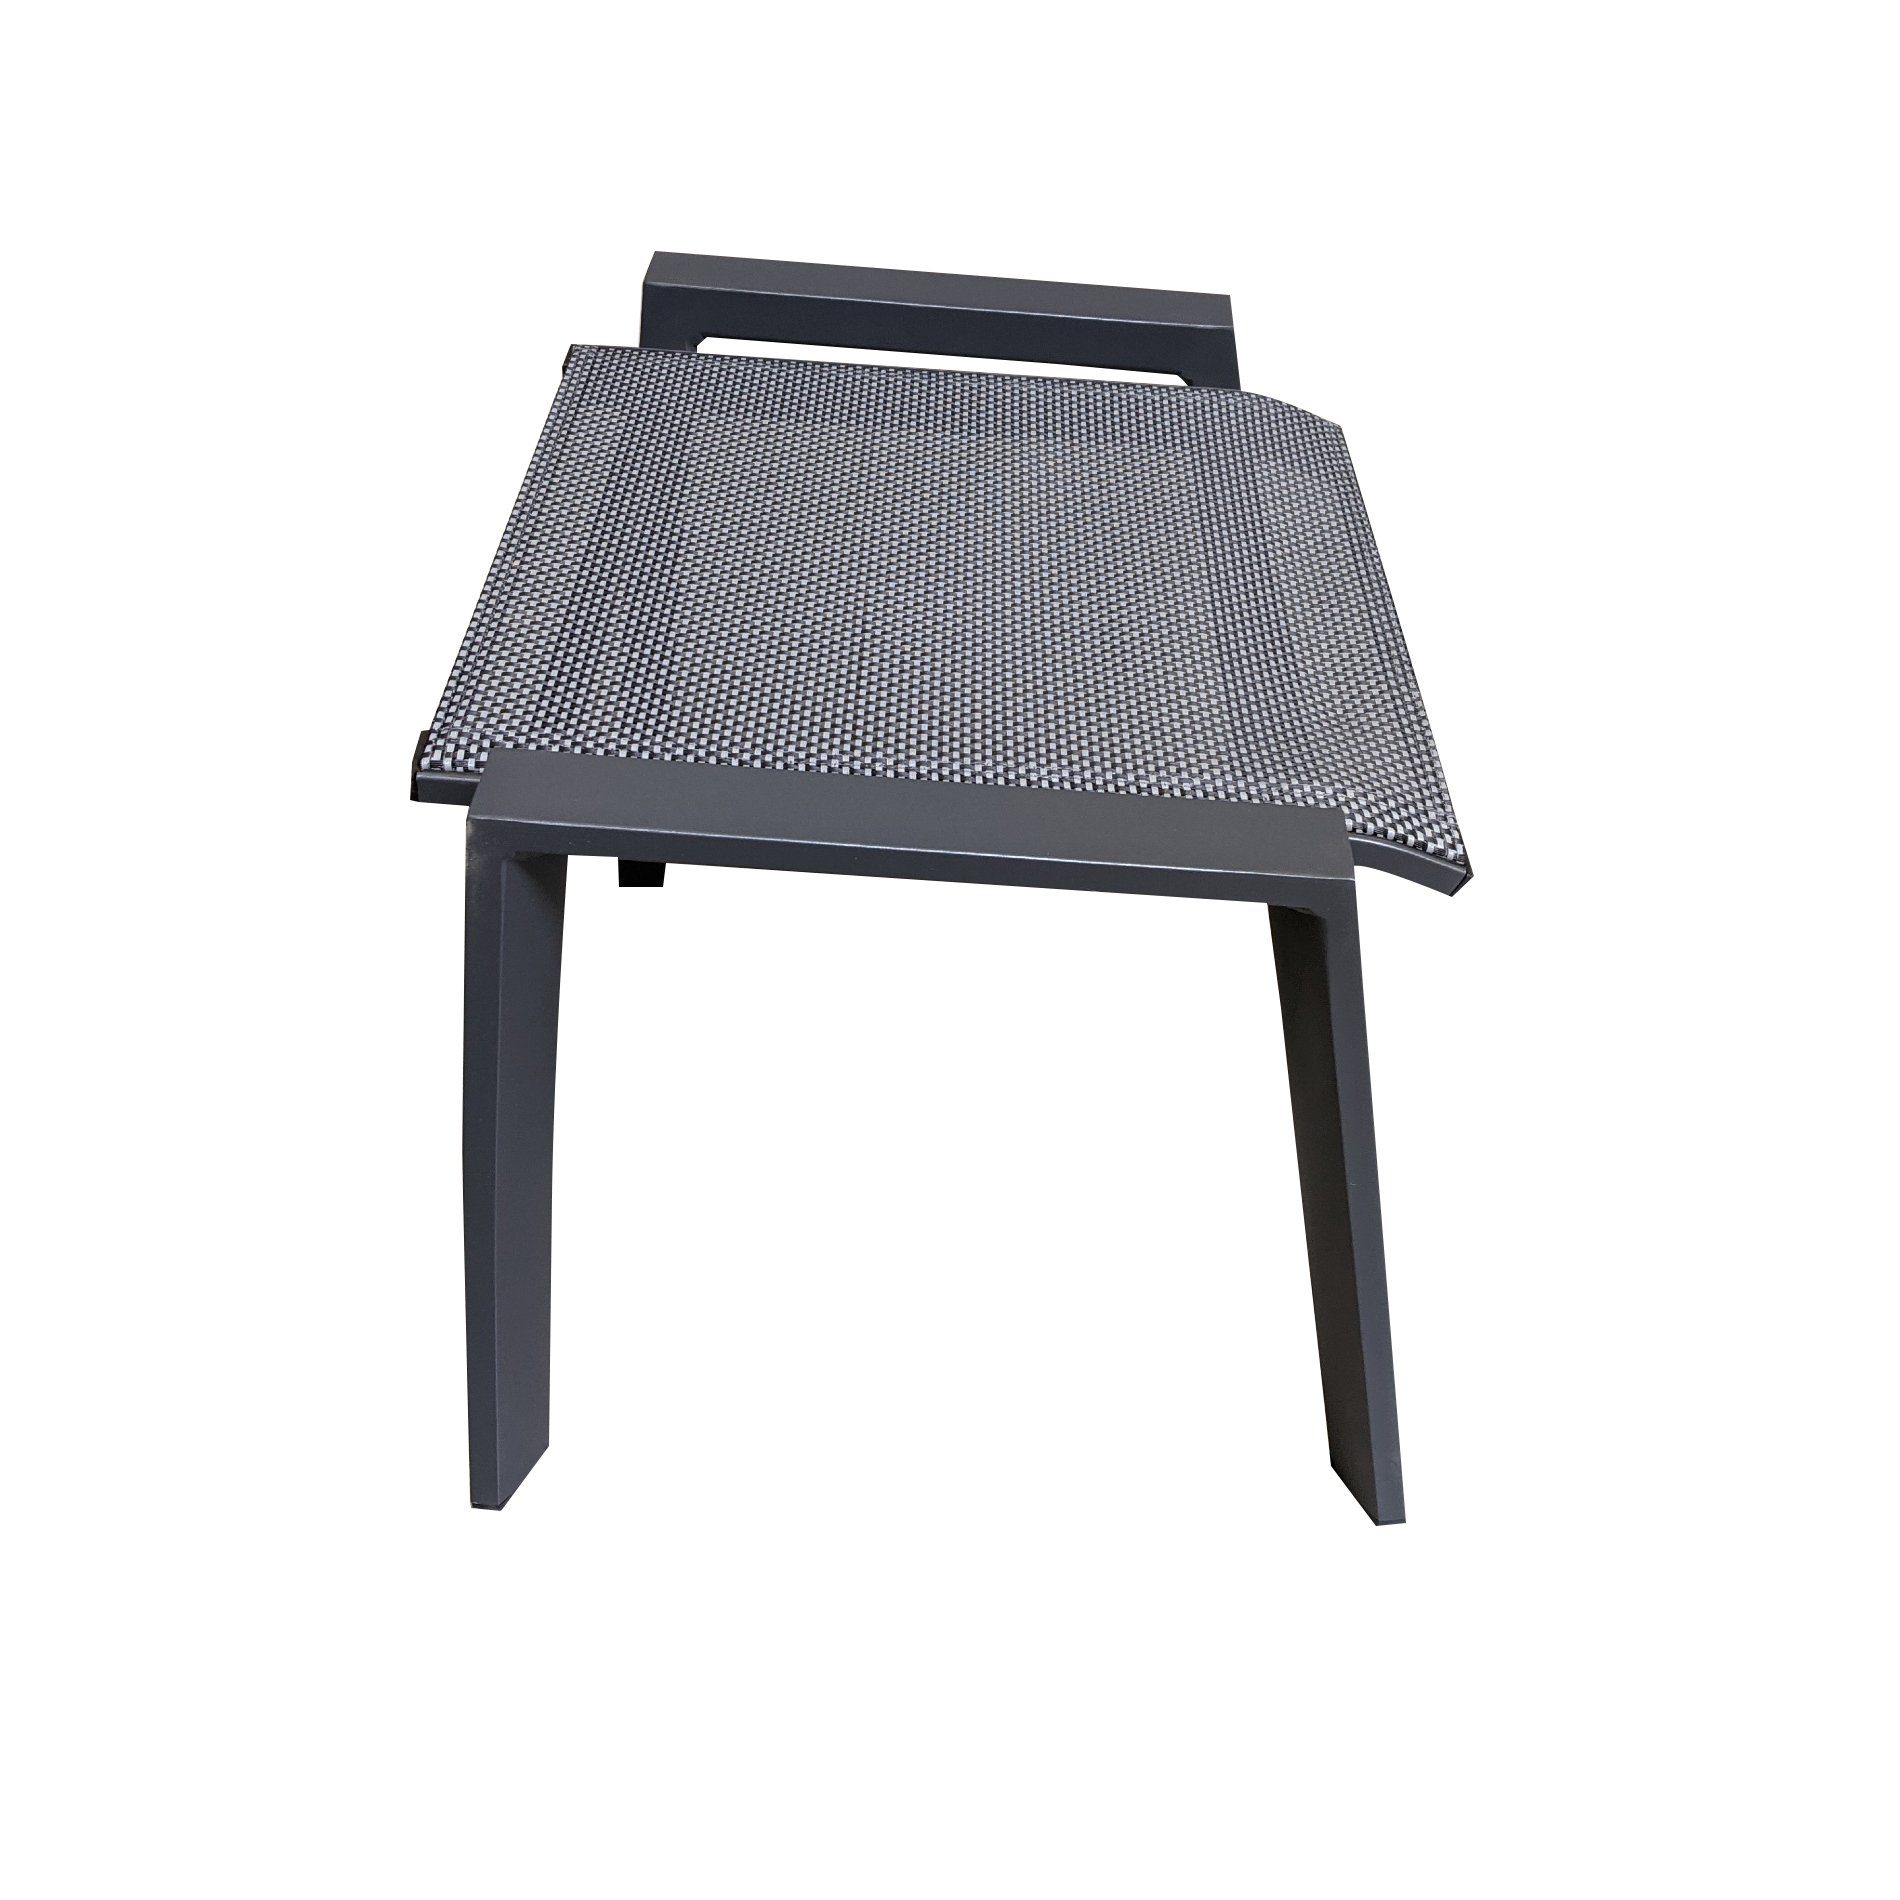 Lesli Living “Amir“ Gartenhocker, Gestell Aluminium anthrazit matt, Sitz Textilgewebe schwarz/grau